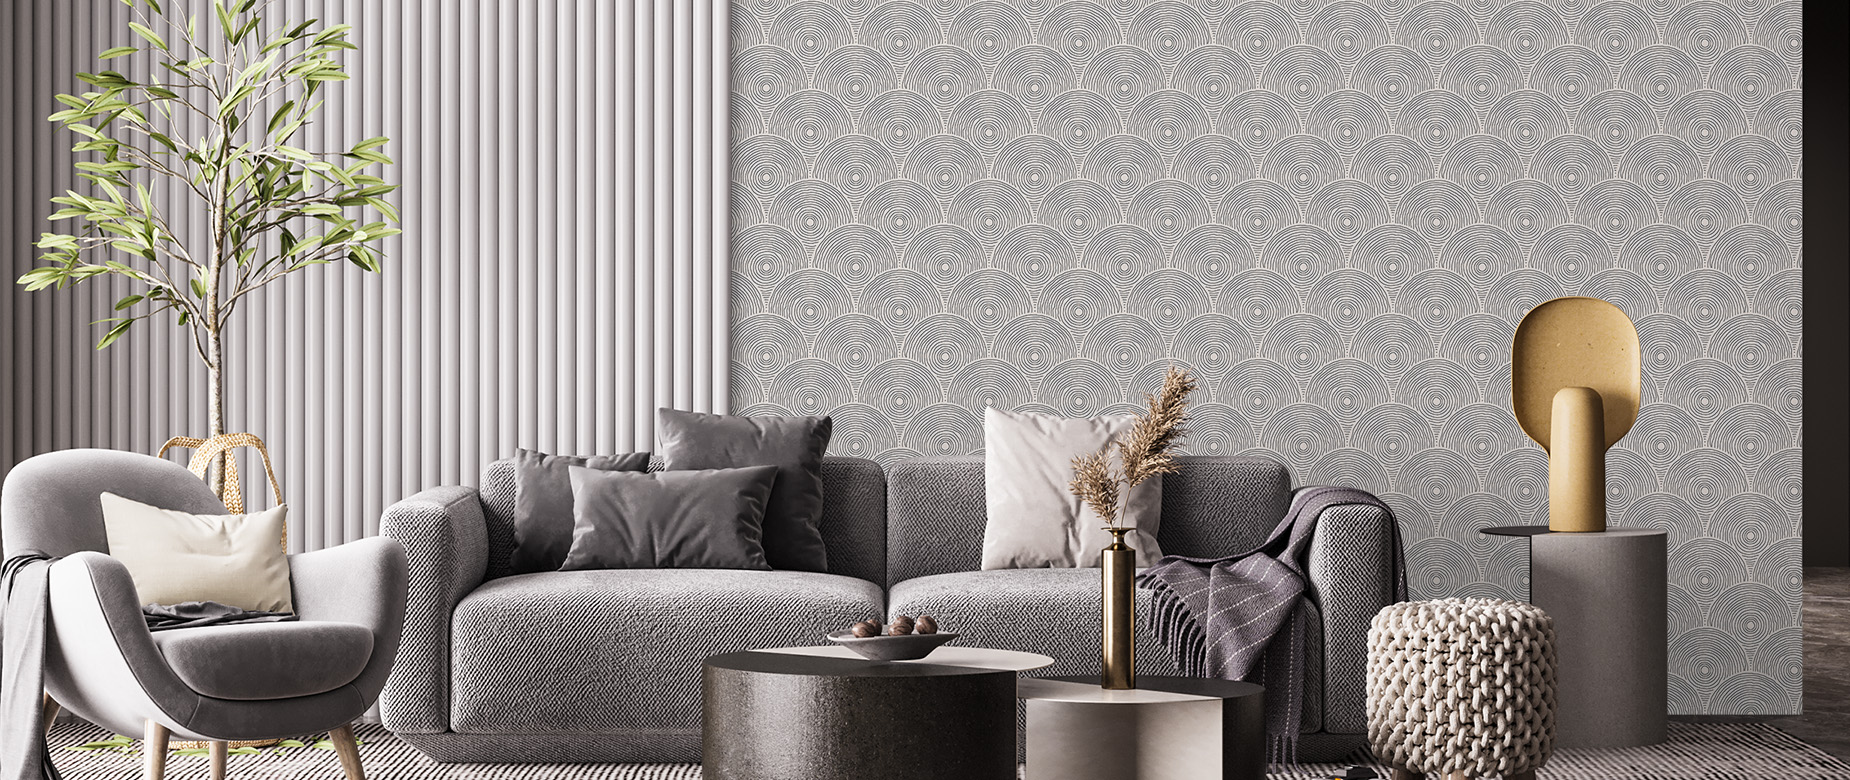 beige-round-design-Seamless design repeat pattern wallpaper-in-wide-room